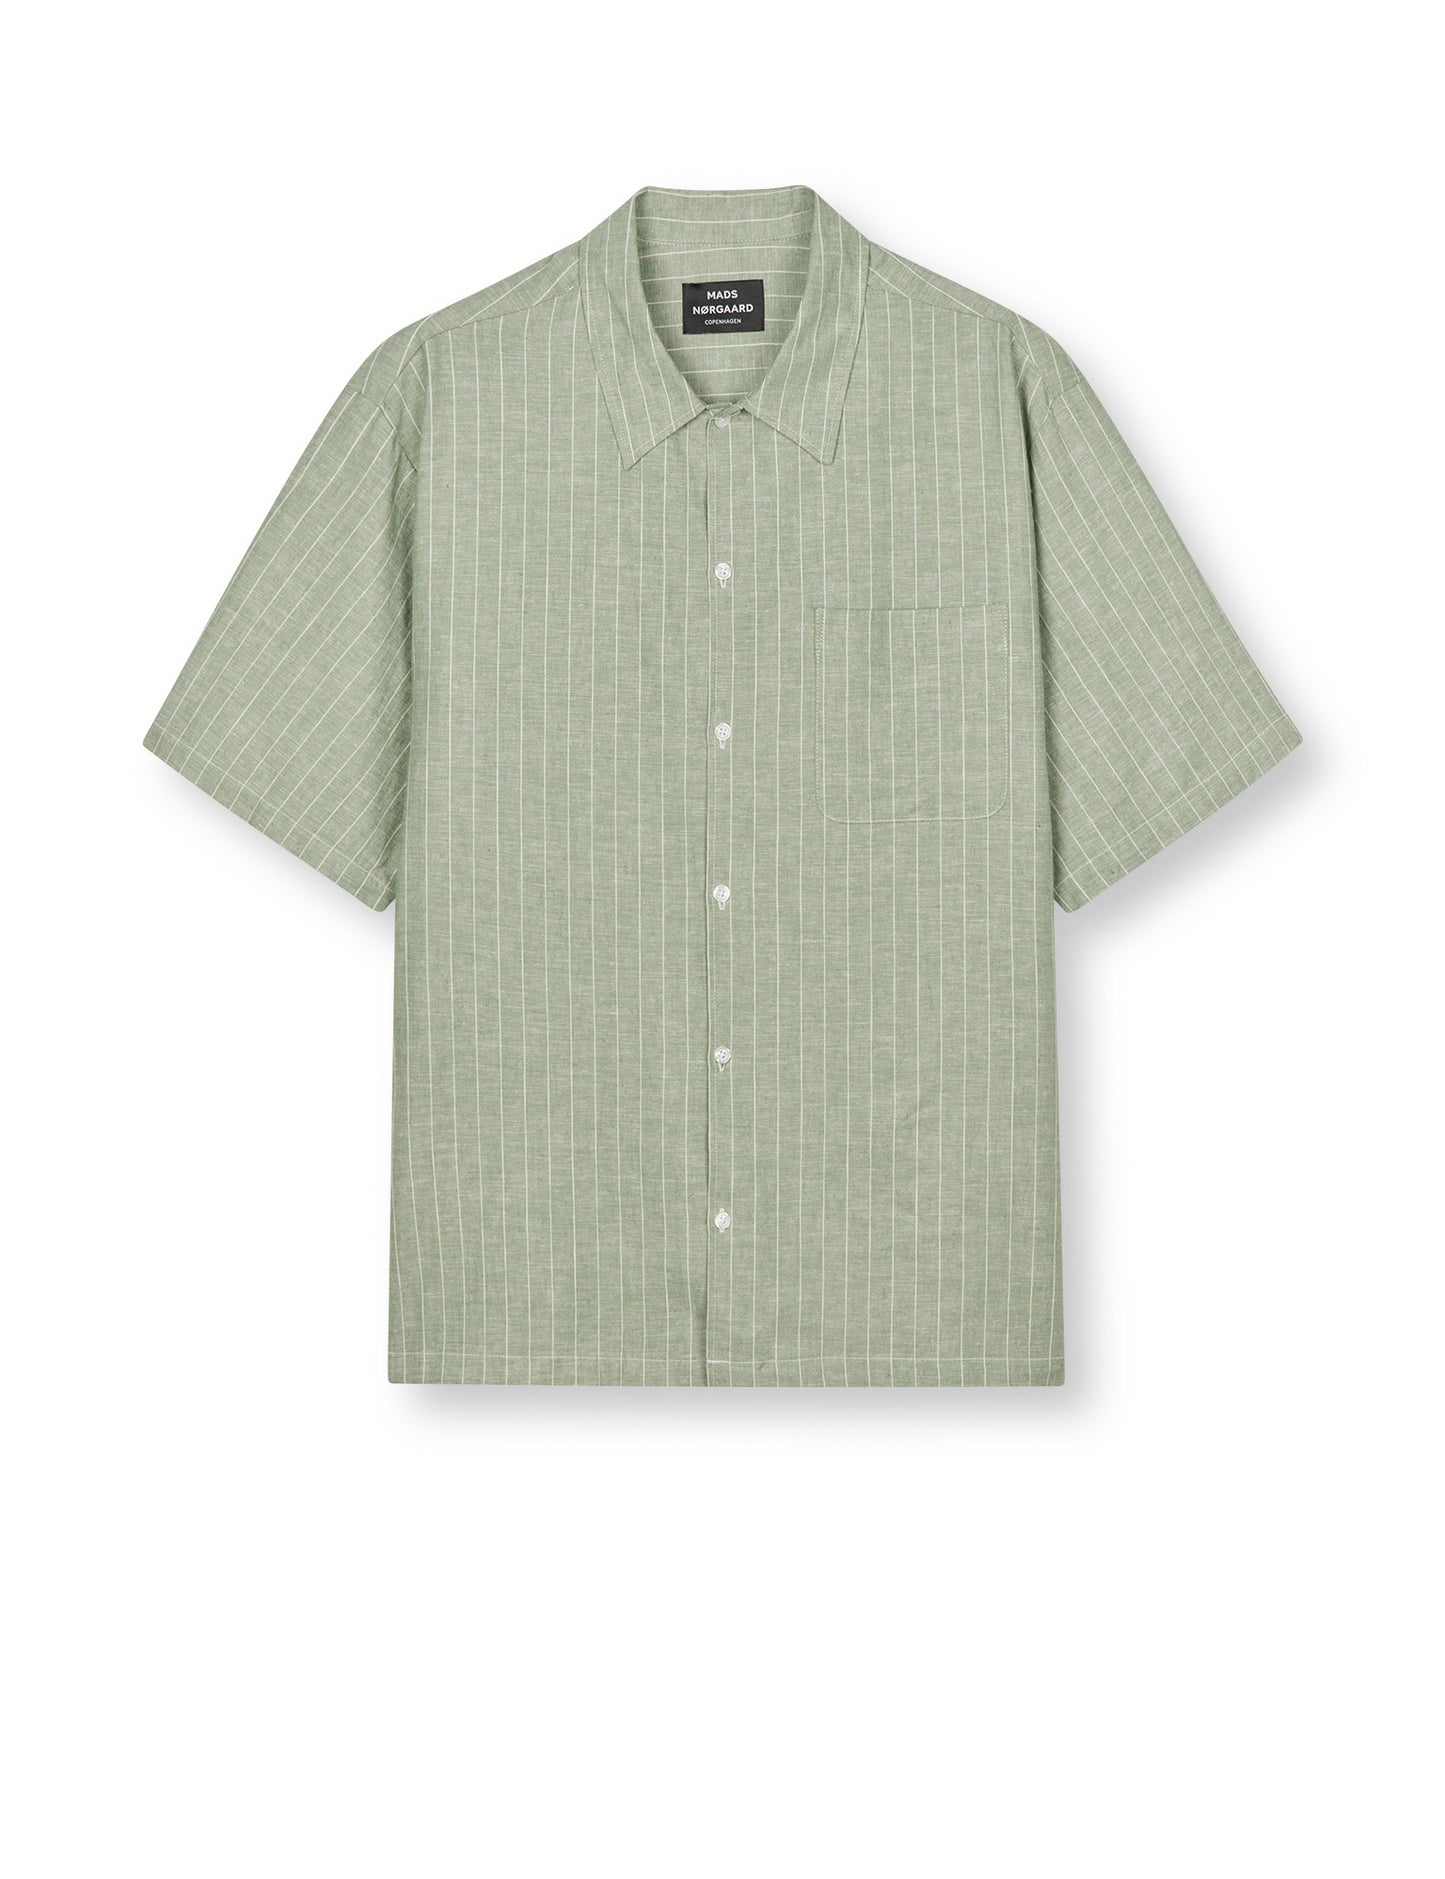 Cotton Linen Mateo Stripe Shirt SS, Sea Spray/Birtch